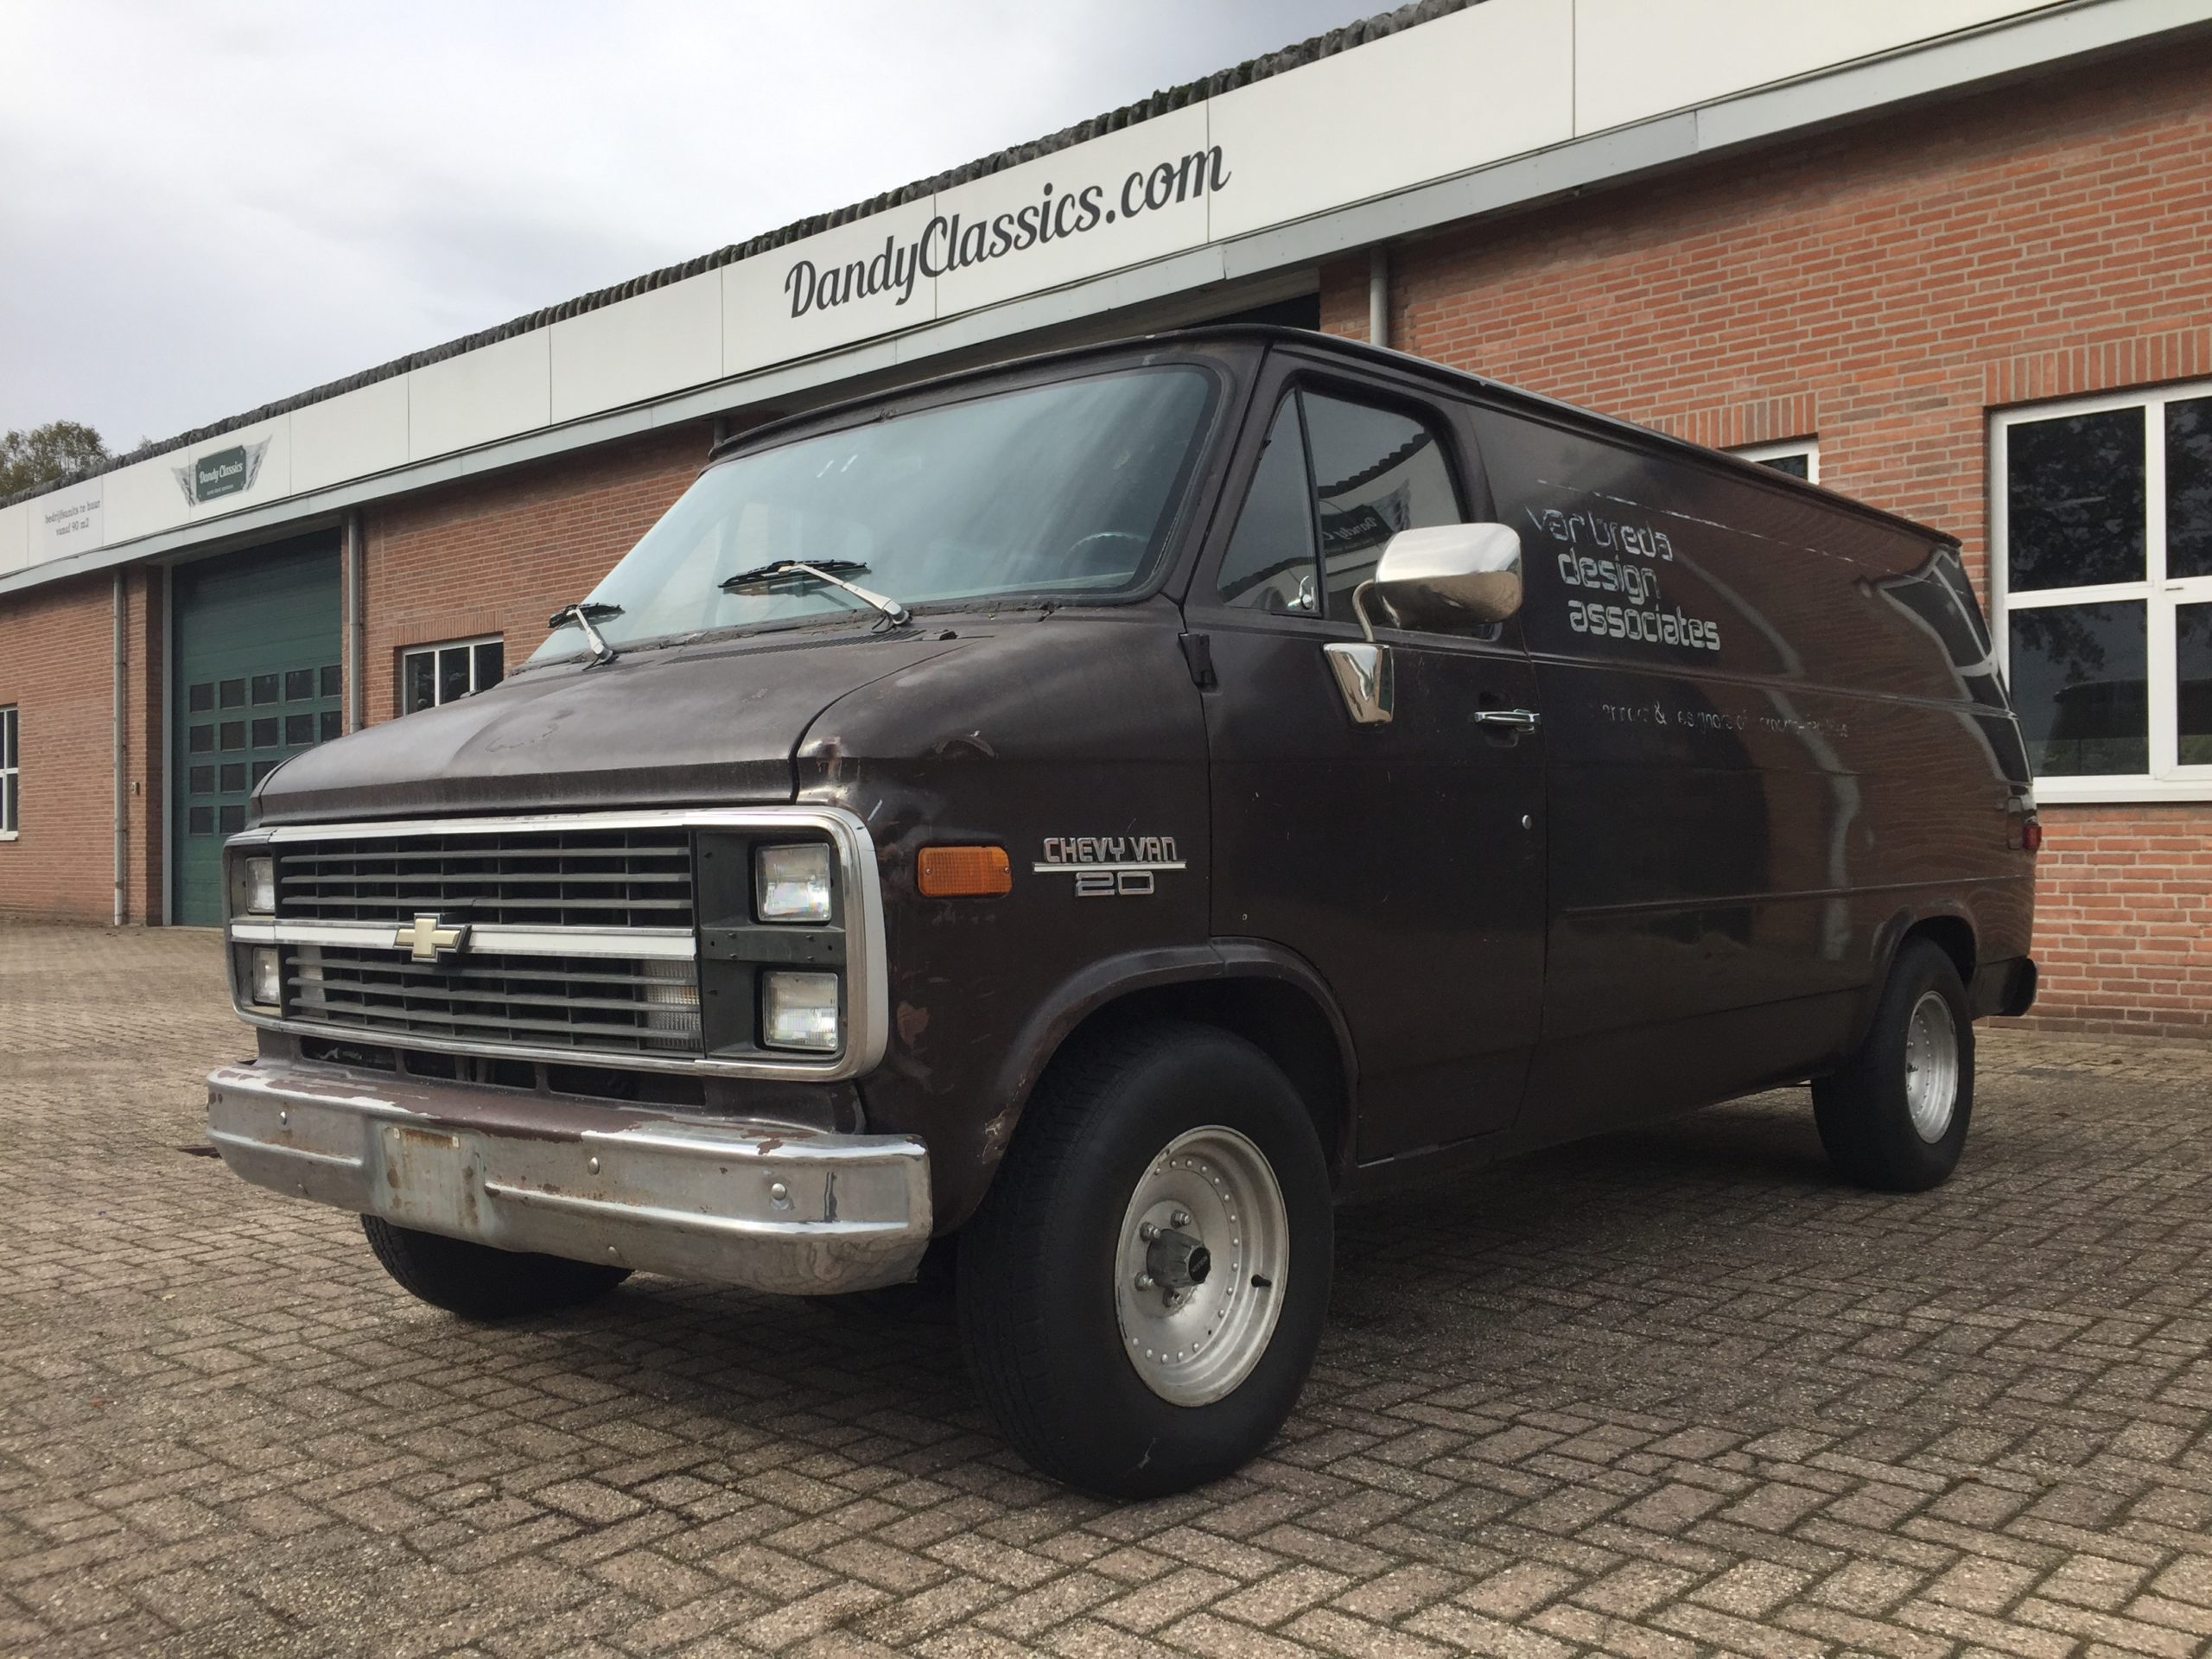 1984 Chevrolet G20 panel van for sale 